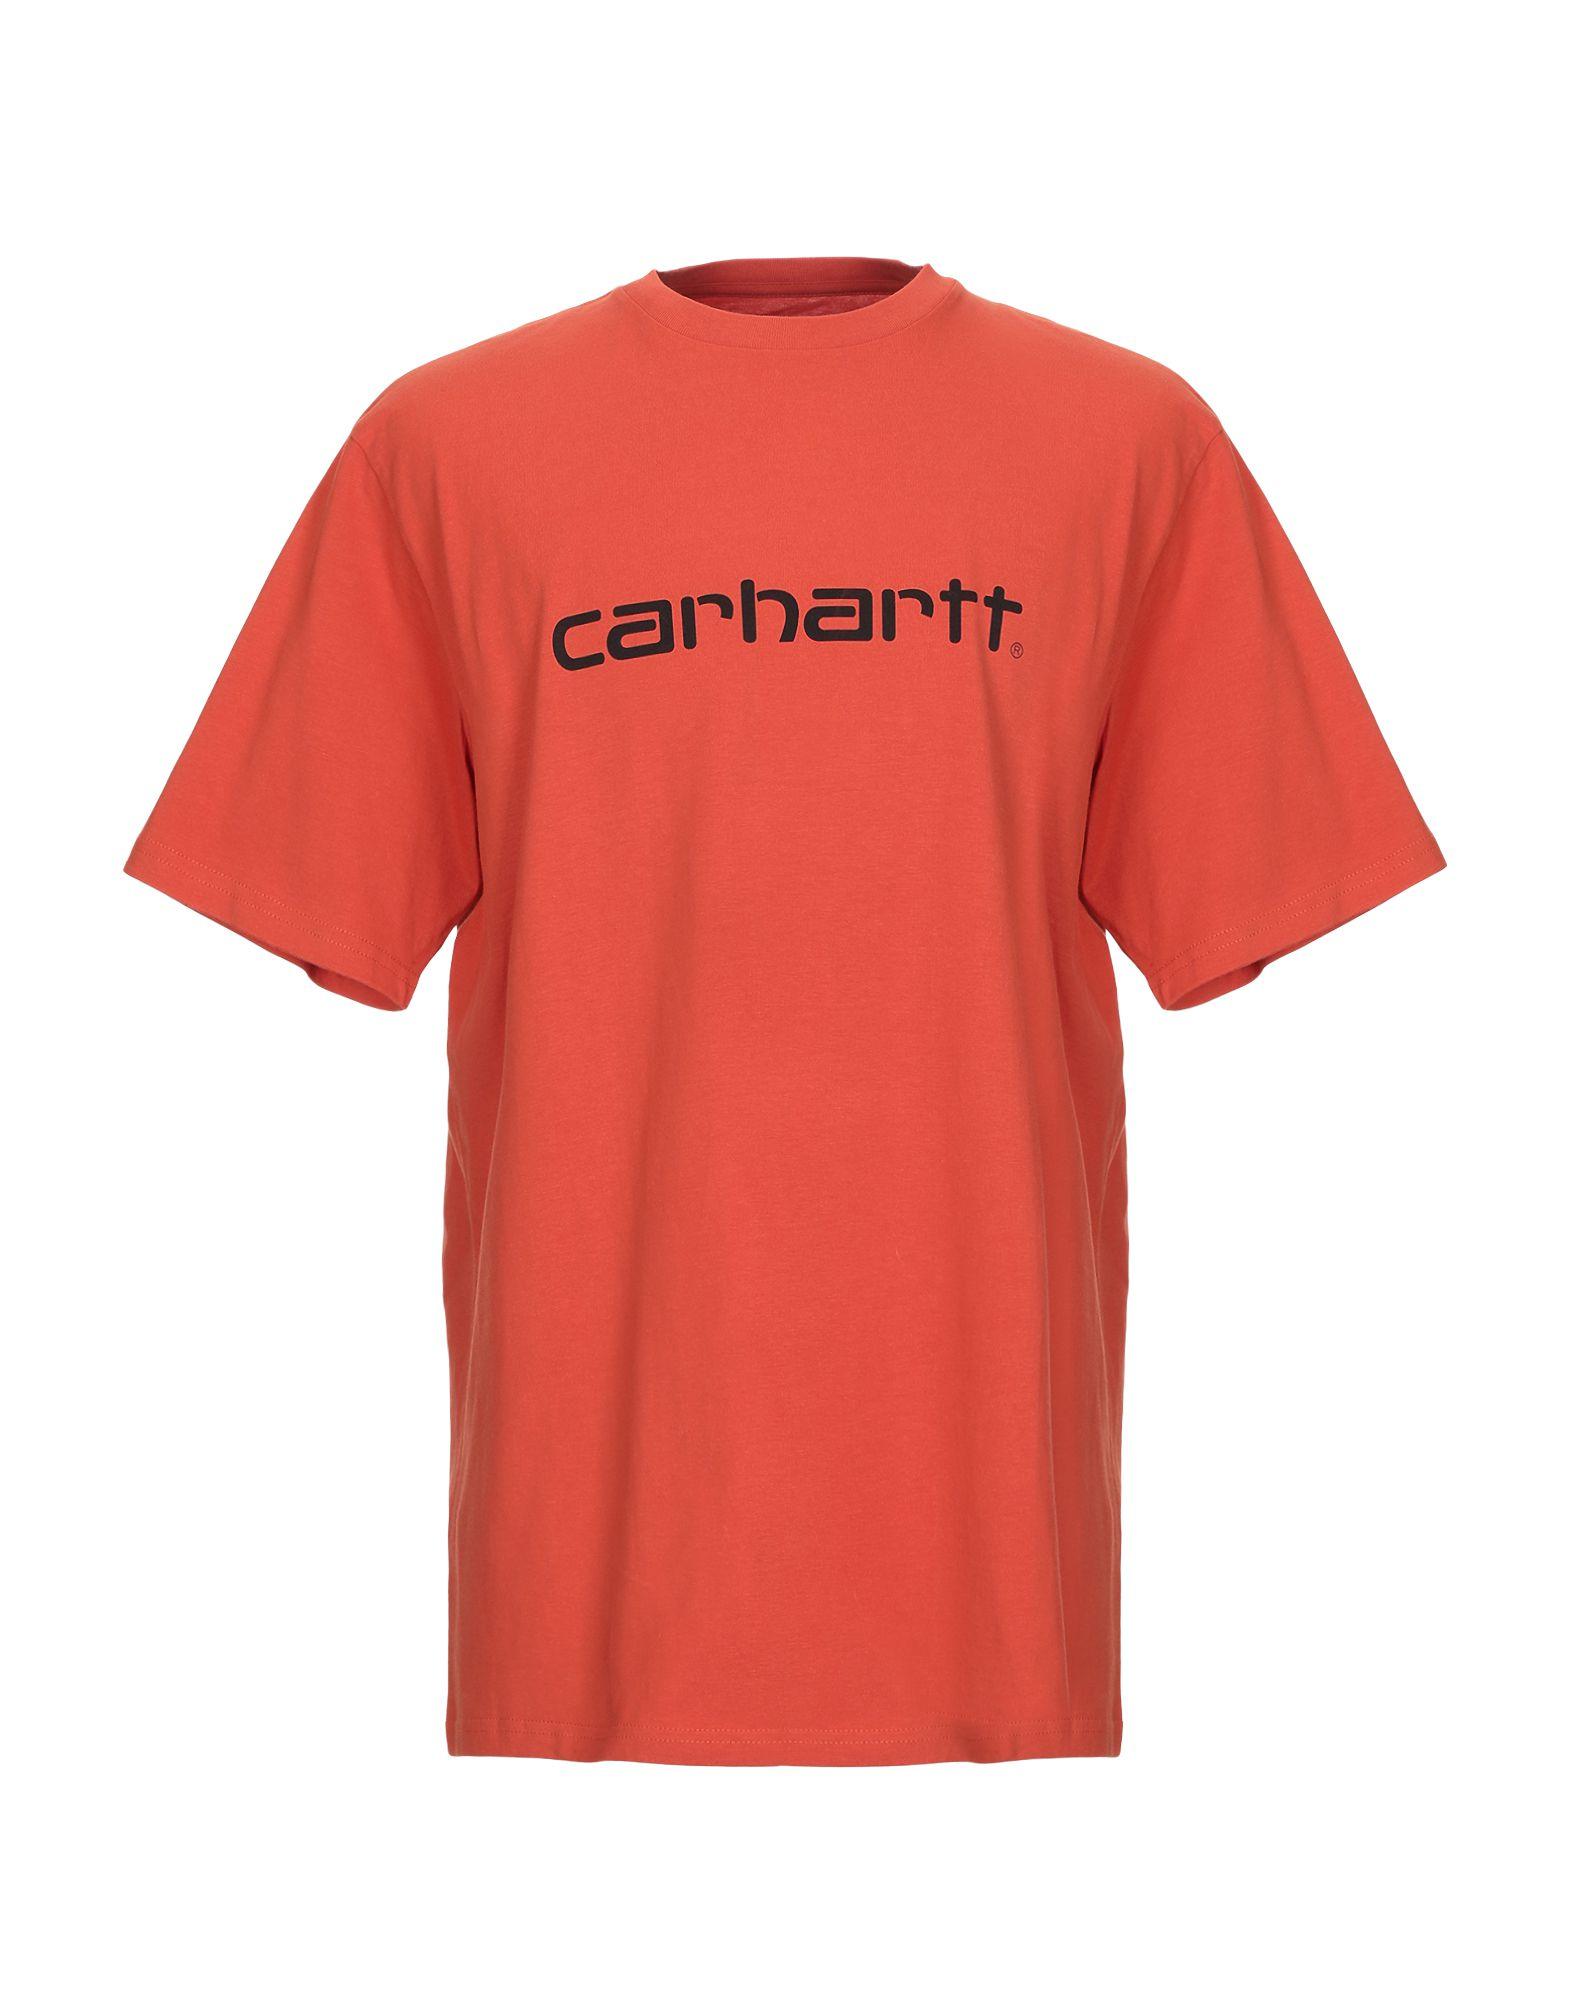 Carhartt T-shirt in Orange for Men - Lyst